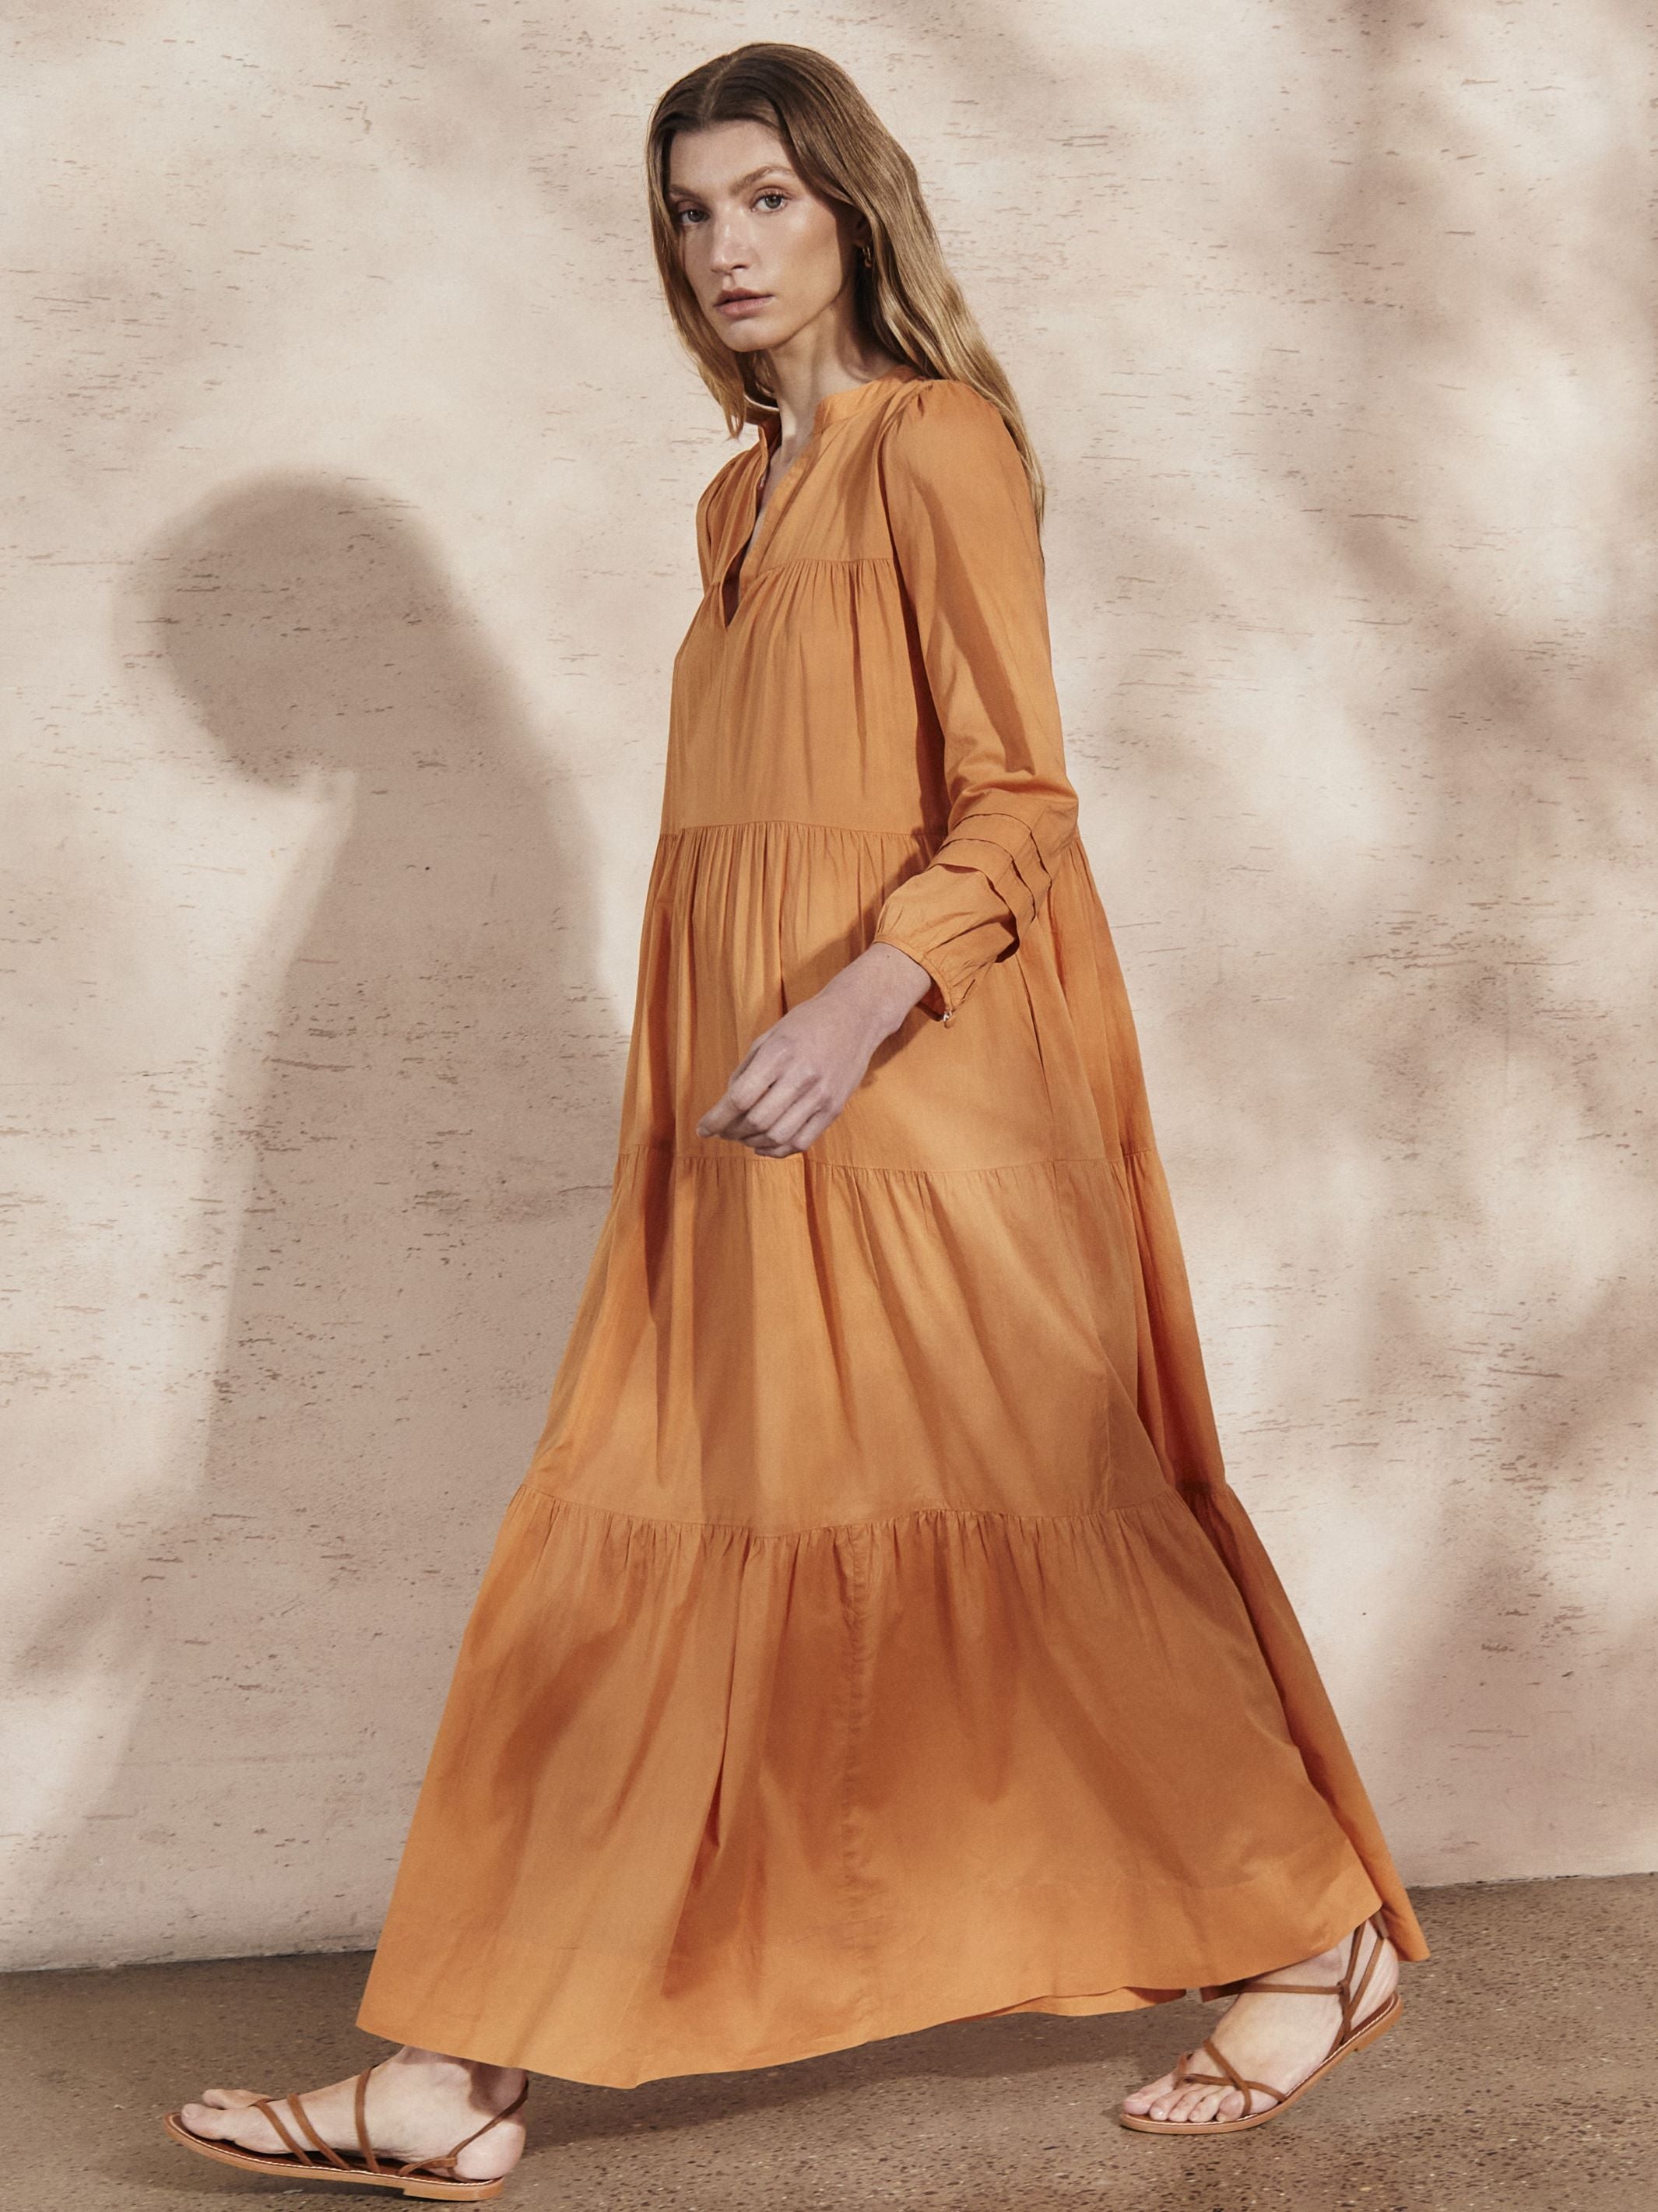 EMILIE  - Tangerine Cotton Dress - Mondo Corsini